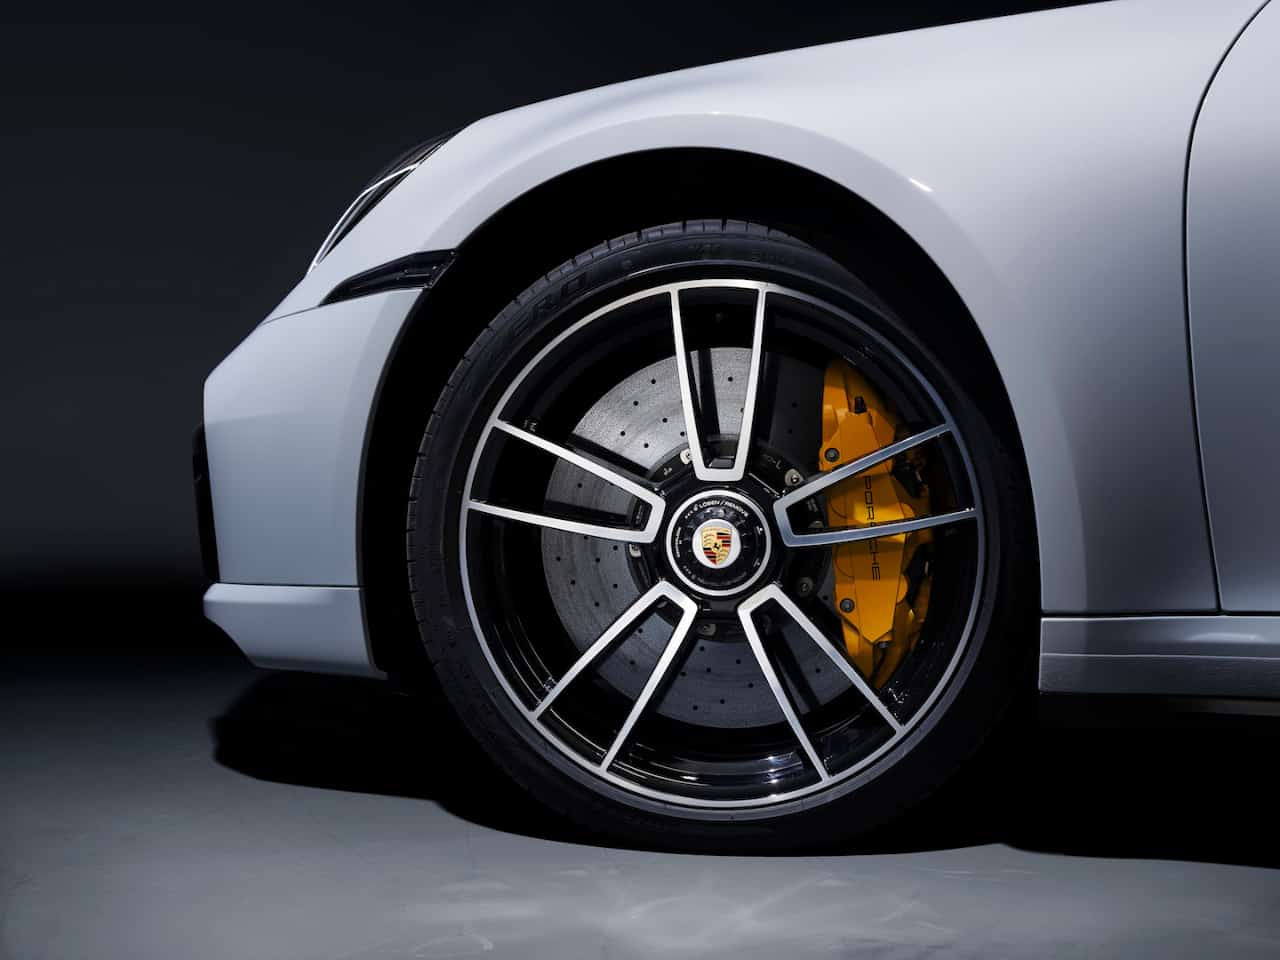 2020 Porsche 911 Turbo front wheel and rim